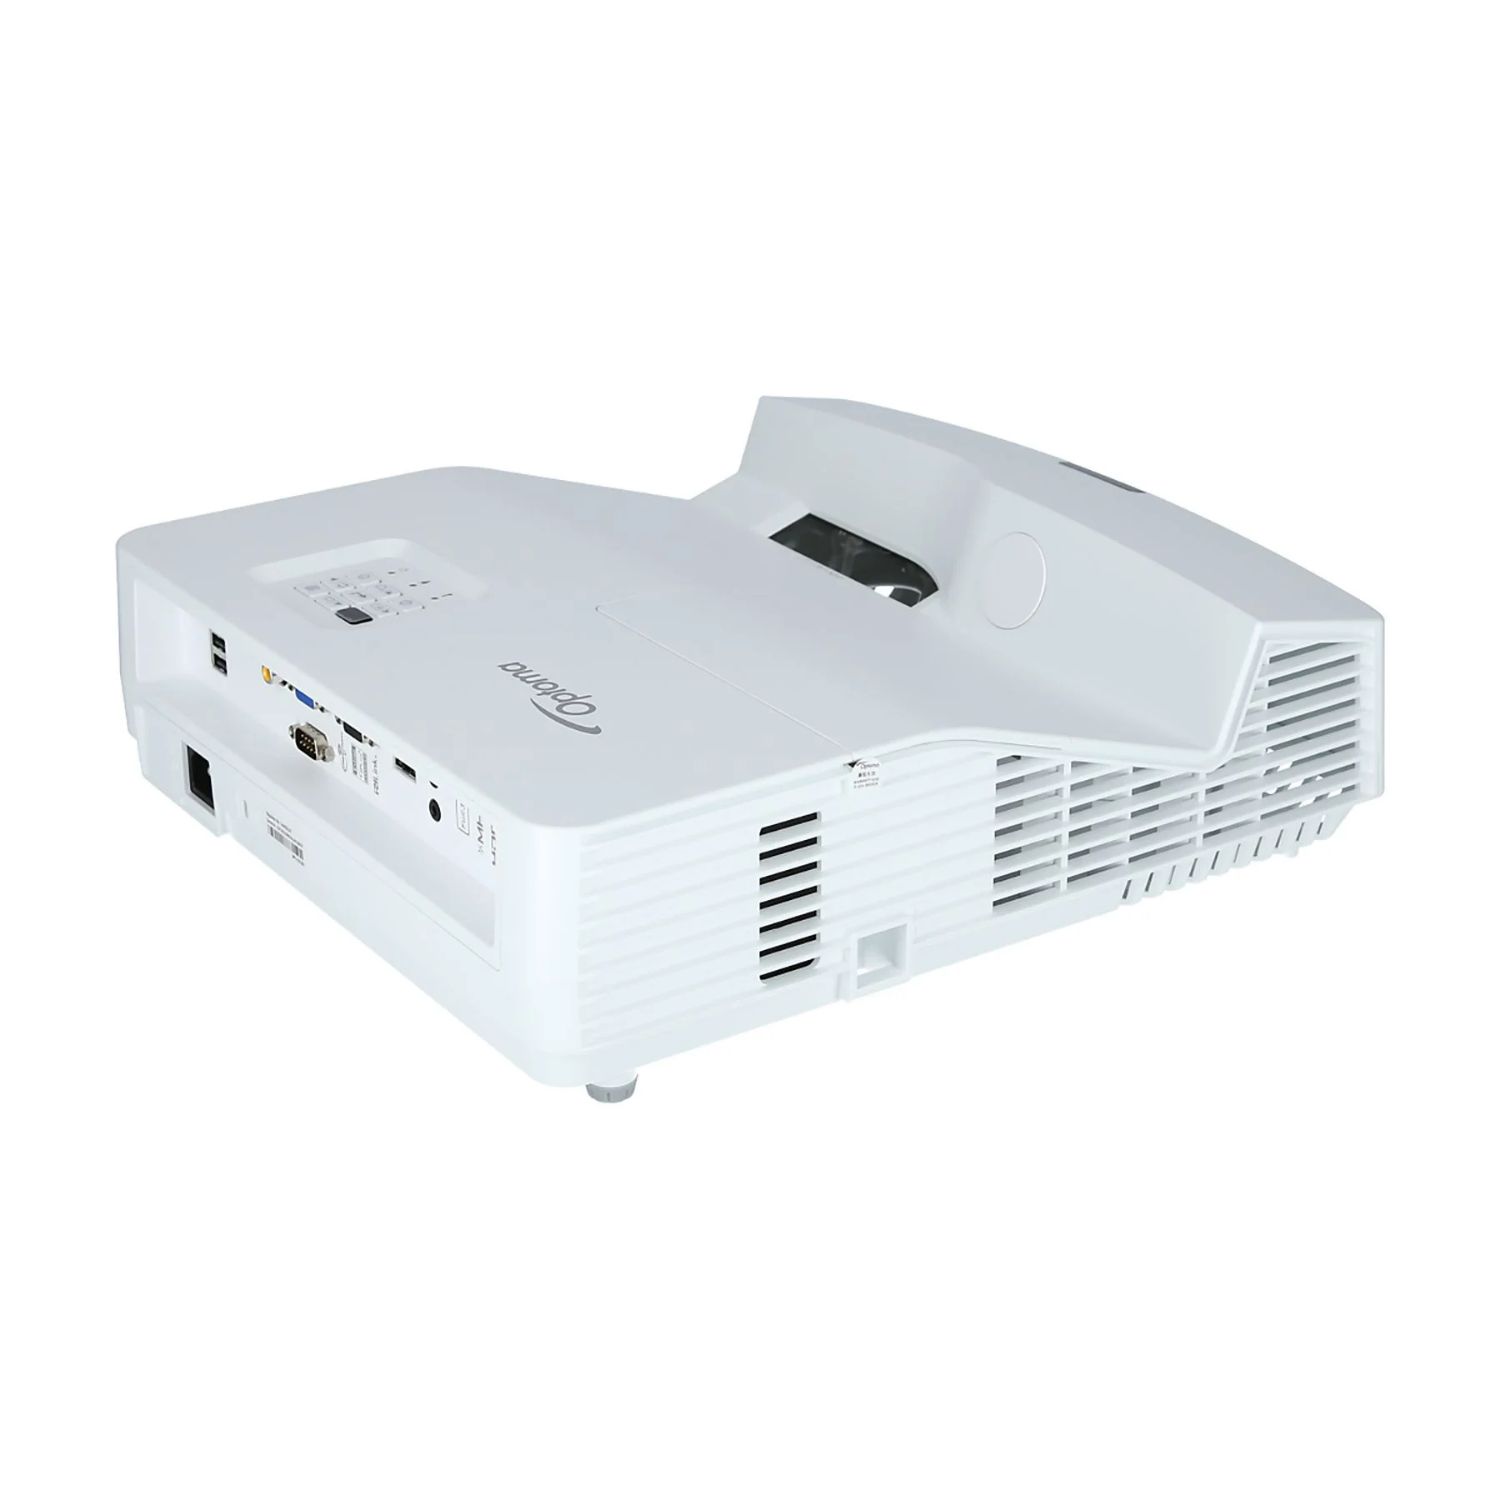 E1P1A1FWE1Z2 - Proyector Optoma W340UST Alcance Ultracorto 16:10 DLP WXGA 4000L 3D 1xVGA 2xHDMI 1xRJ45 RS-232 Blanco (E1P1A1FWE1Z2)